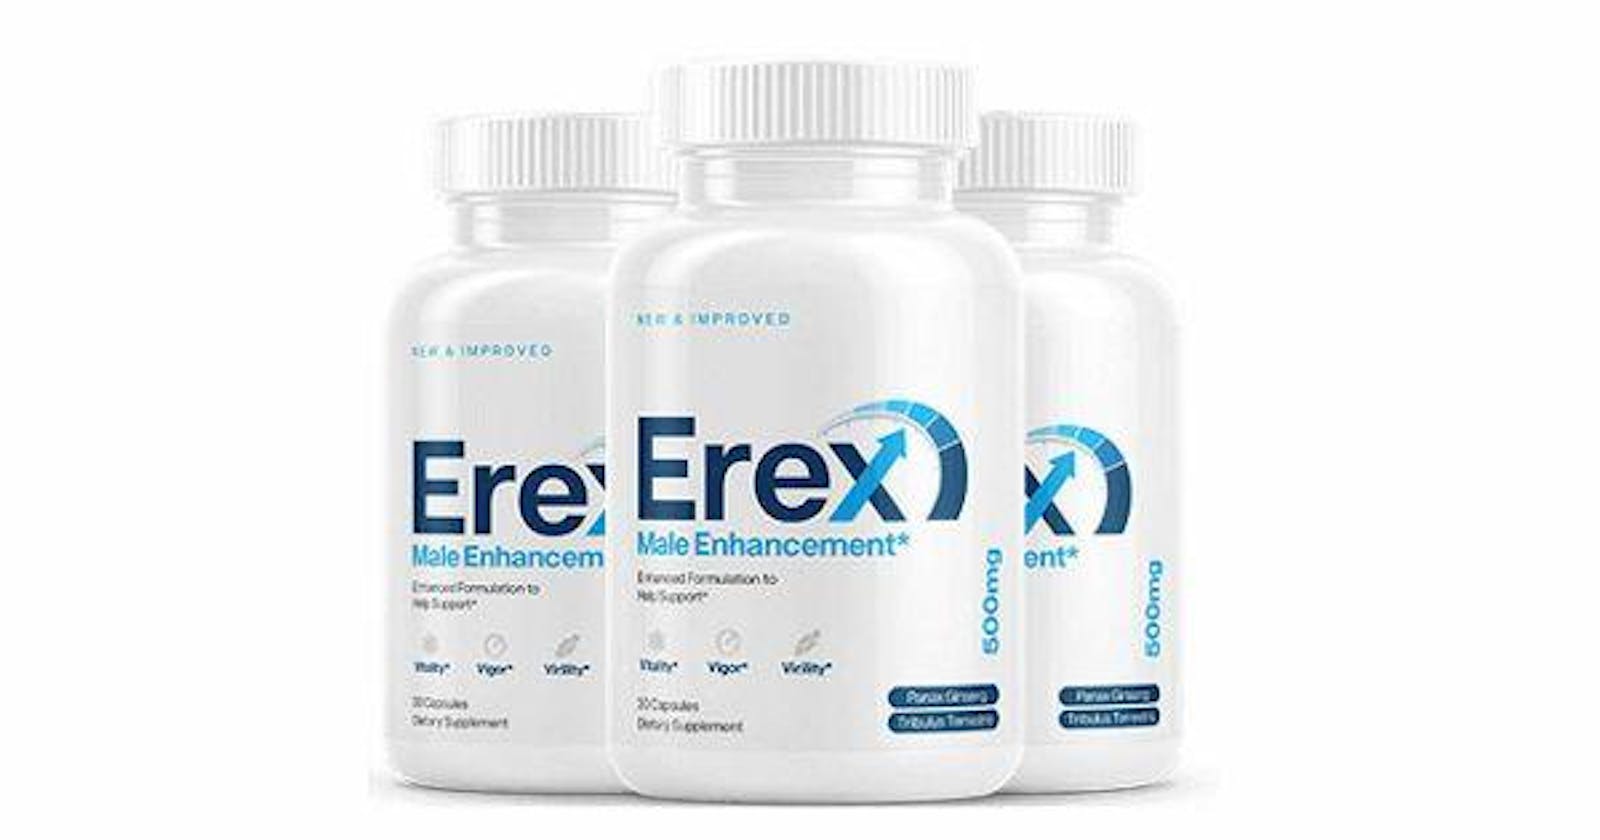 Erex Male Enhancement Price : Reviews, Ingredients